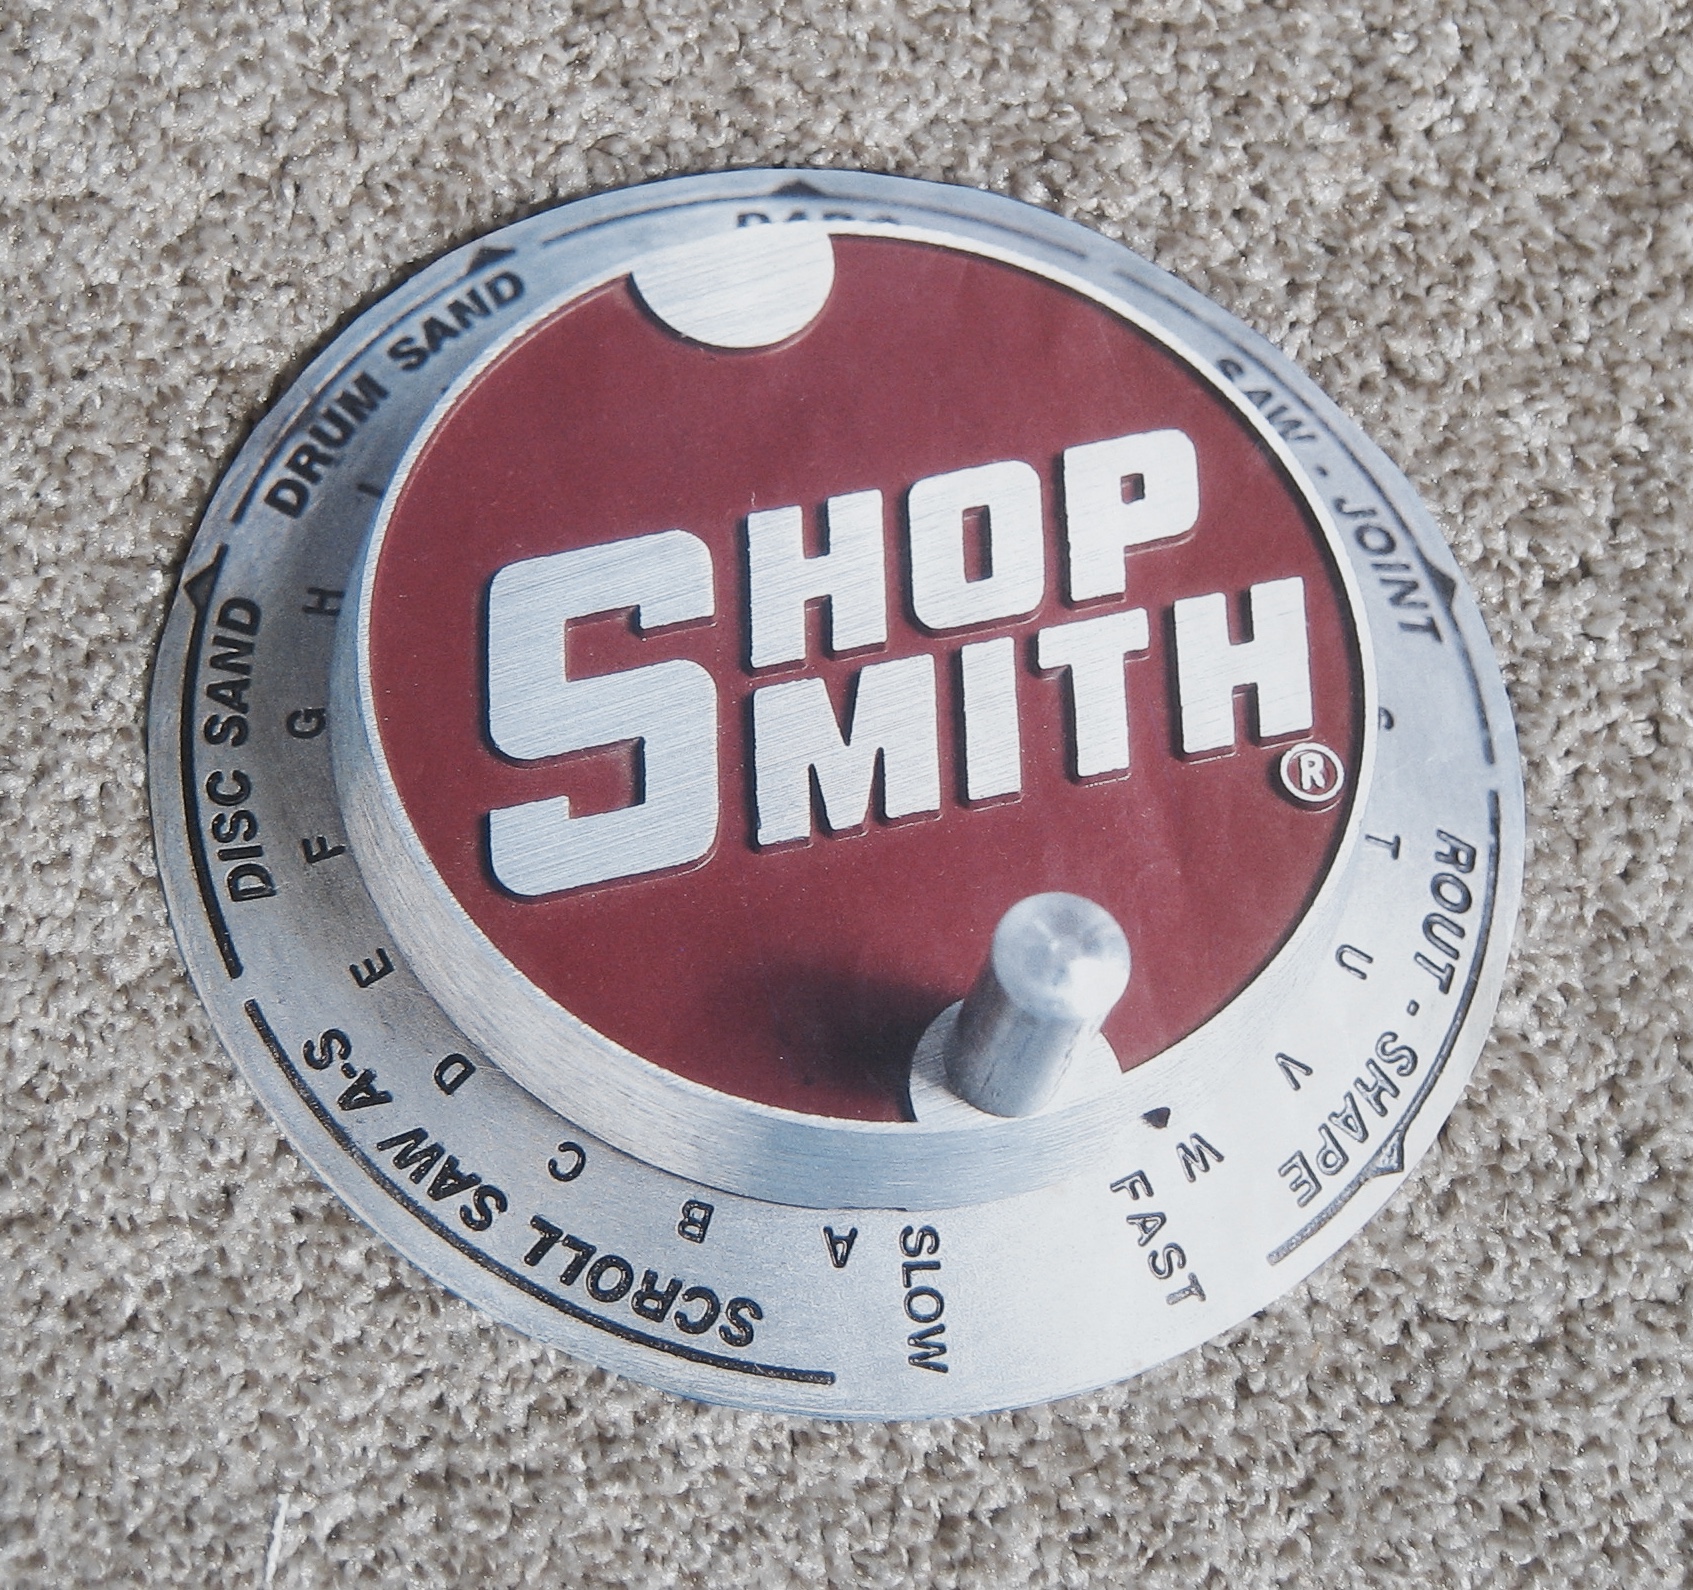 Shopsmith World Shopsmith / Serving & Repair